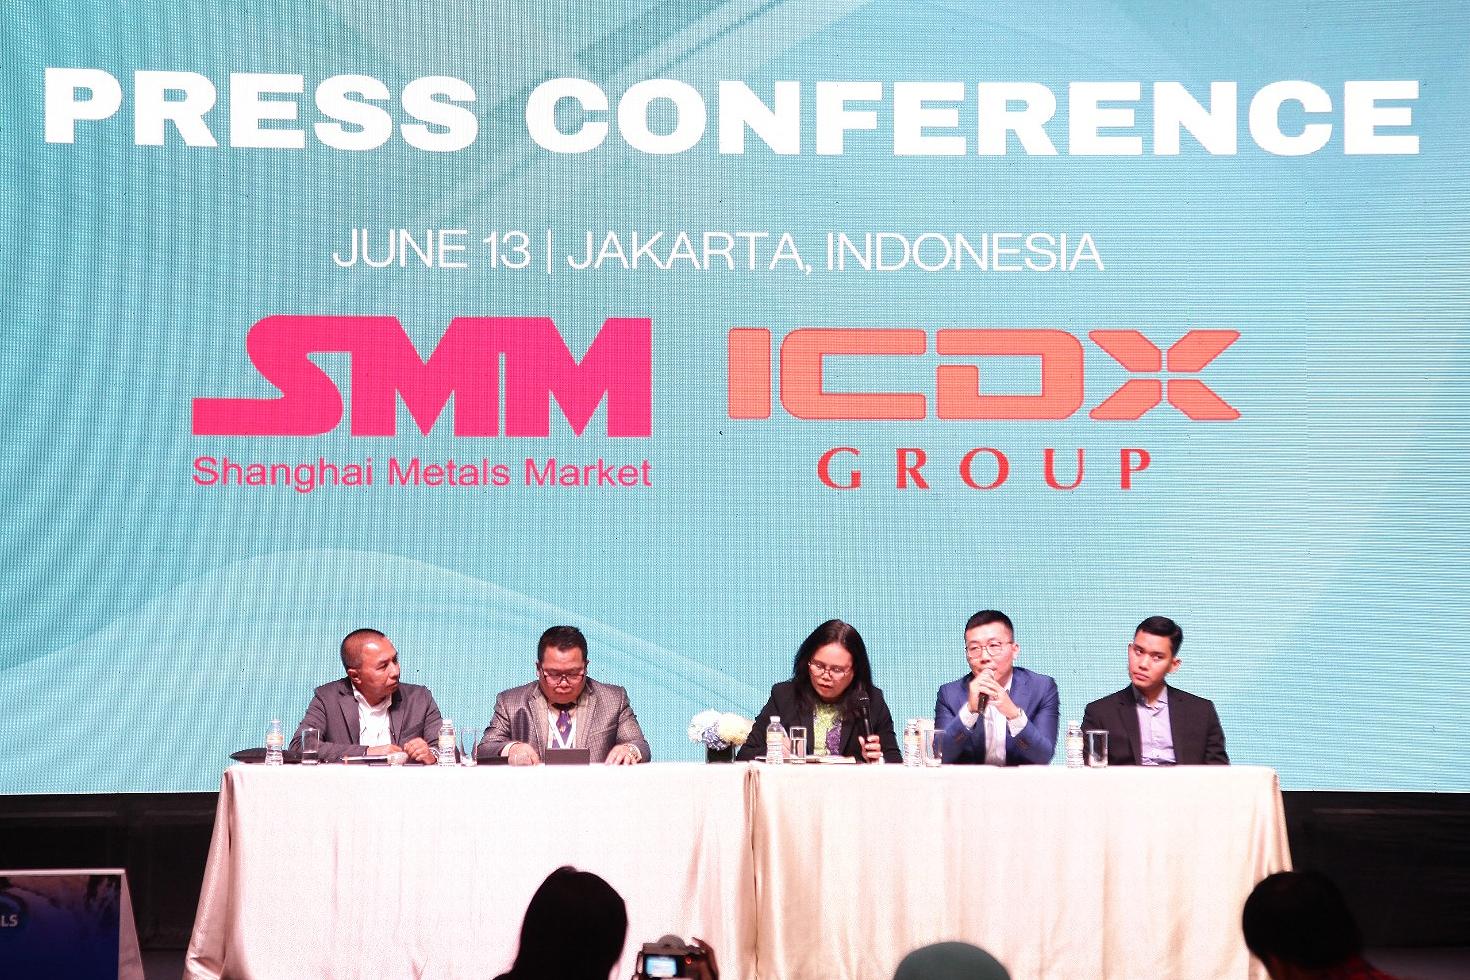 Dukung Dekarbonisasi, ICDX Jalankan Indonesia Clean Metal Initiatives